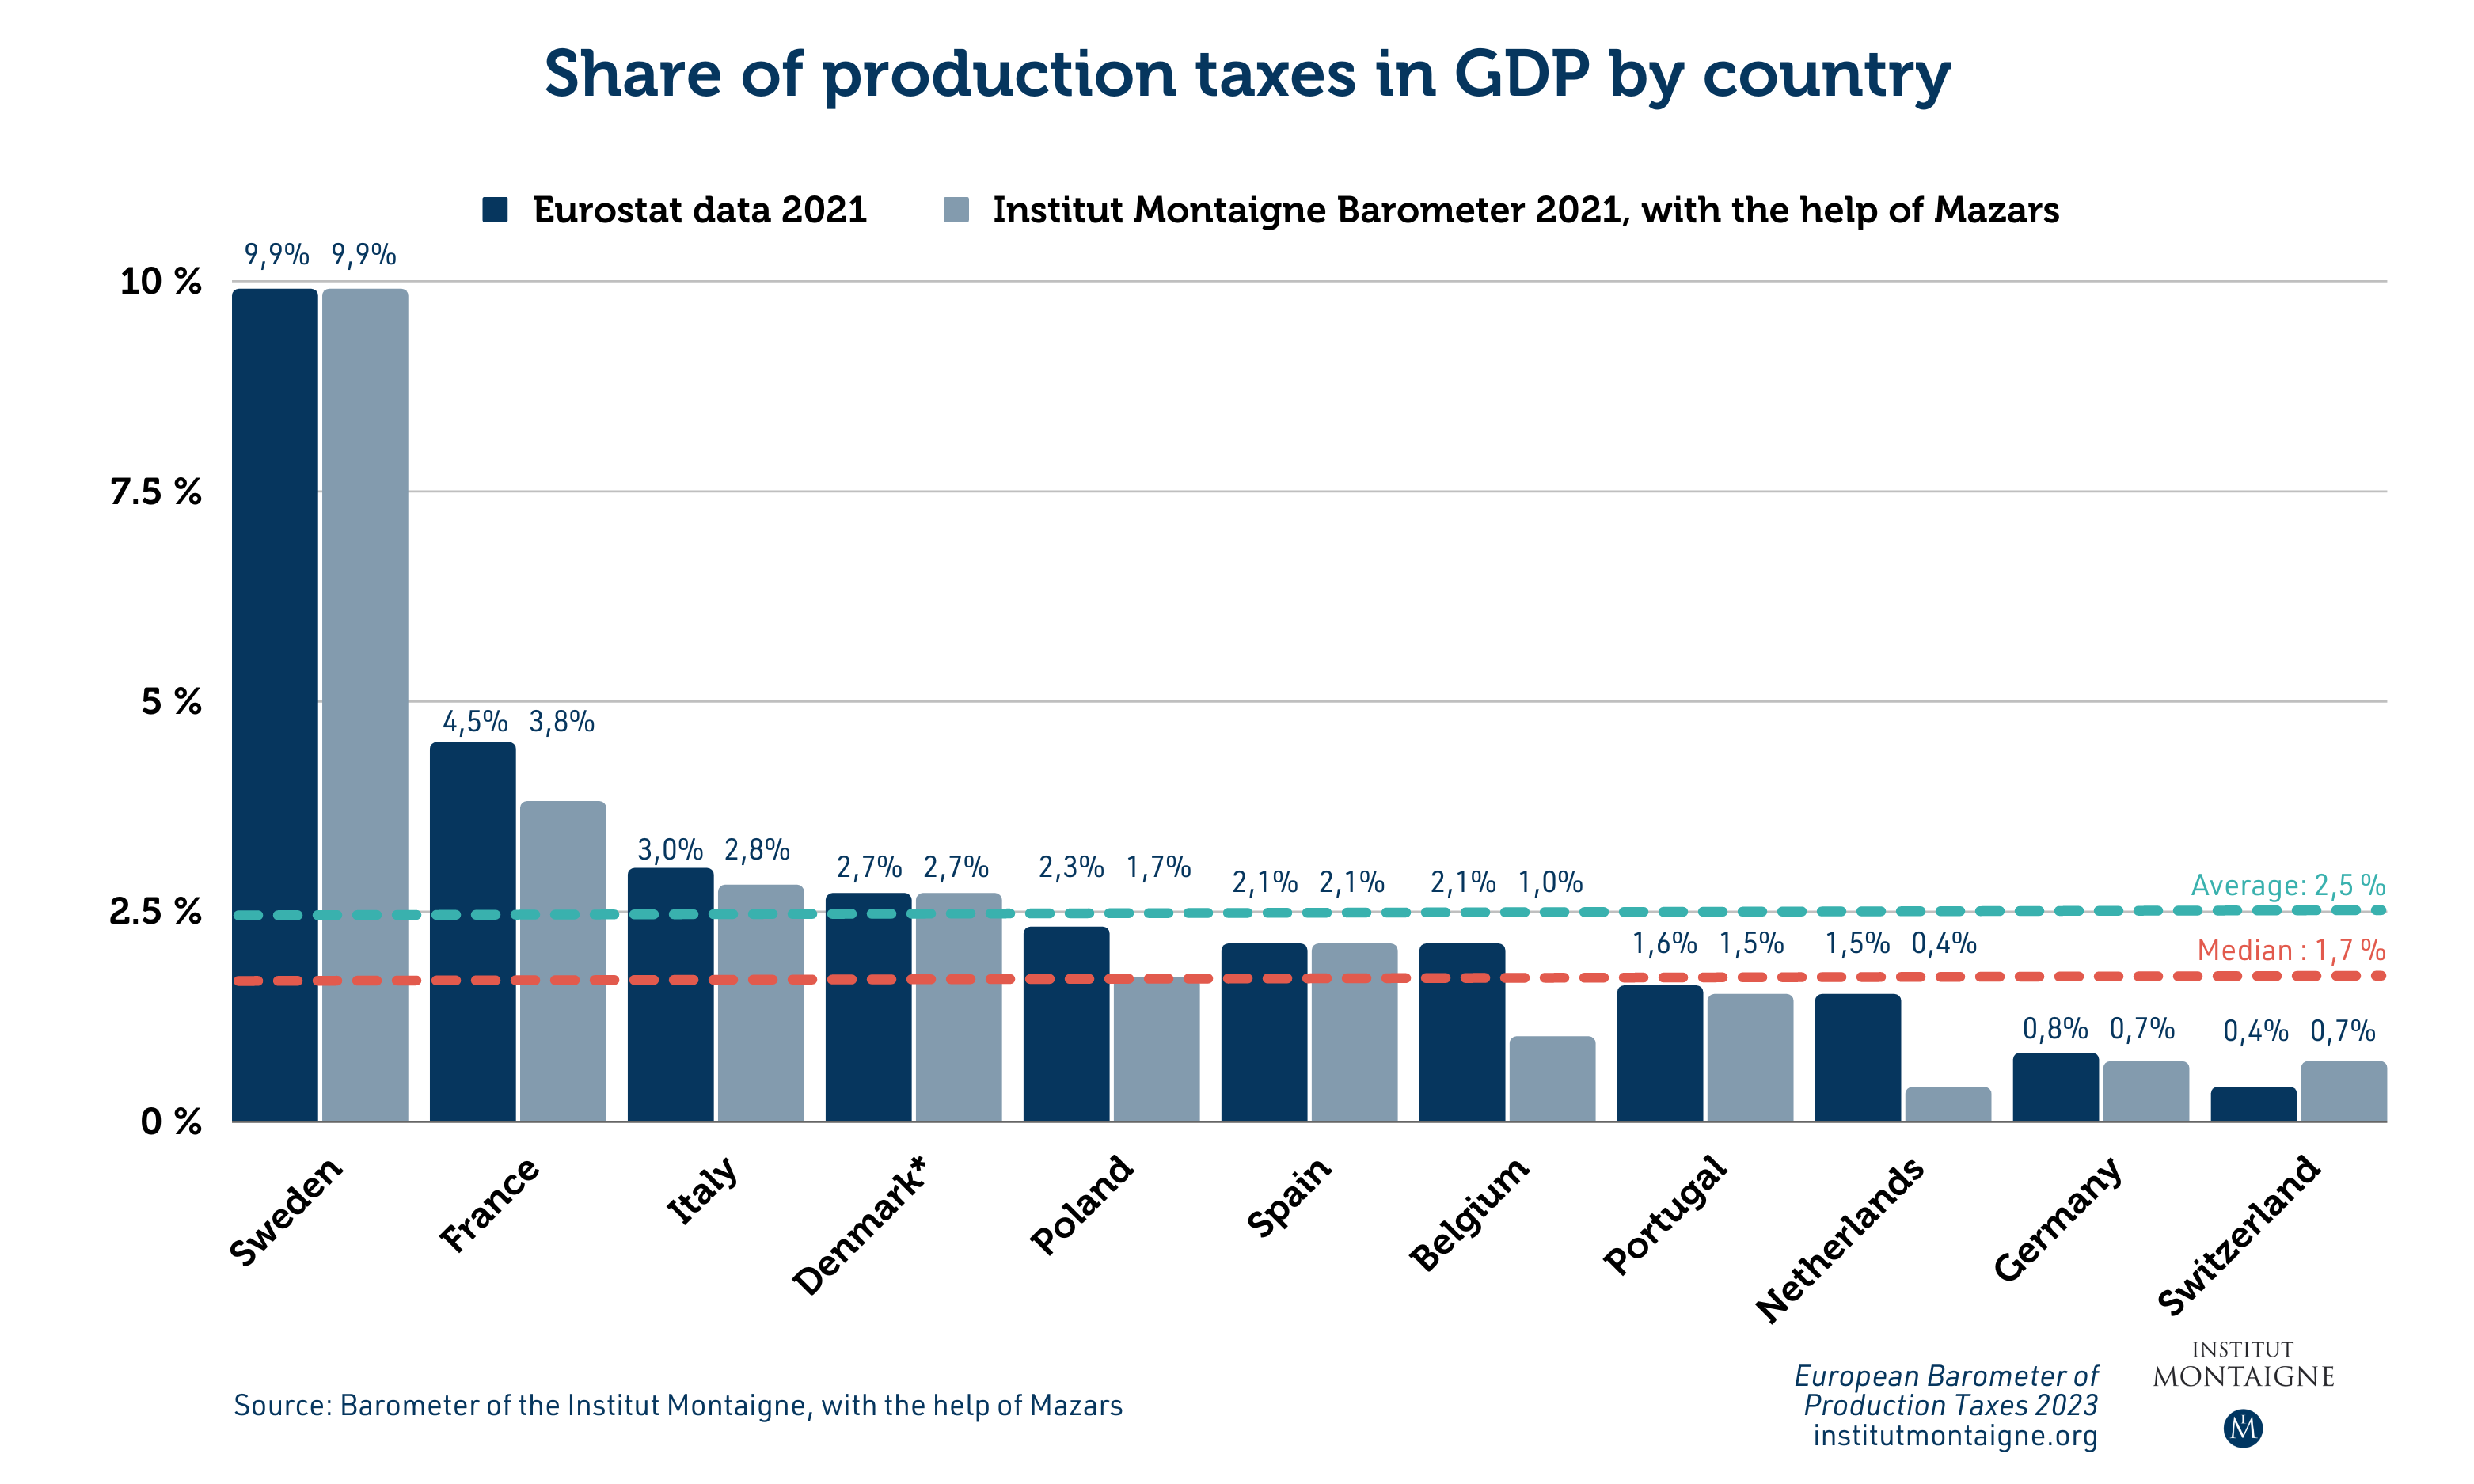 European Production Tax Barometer 2023